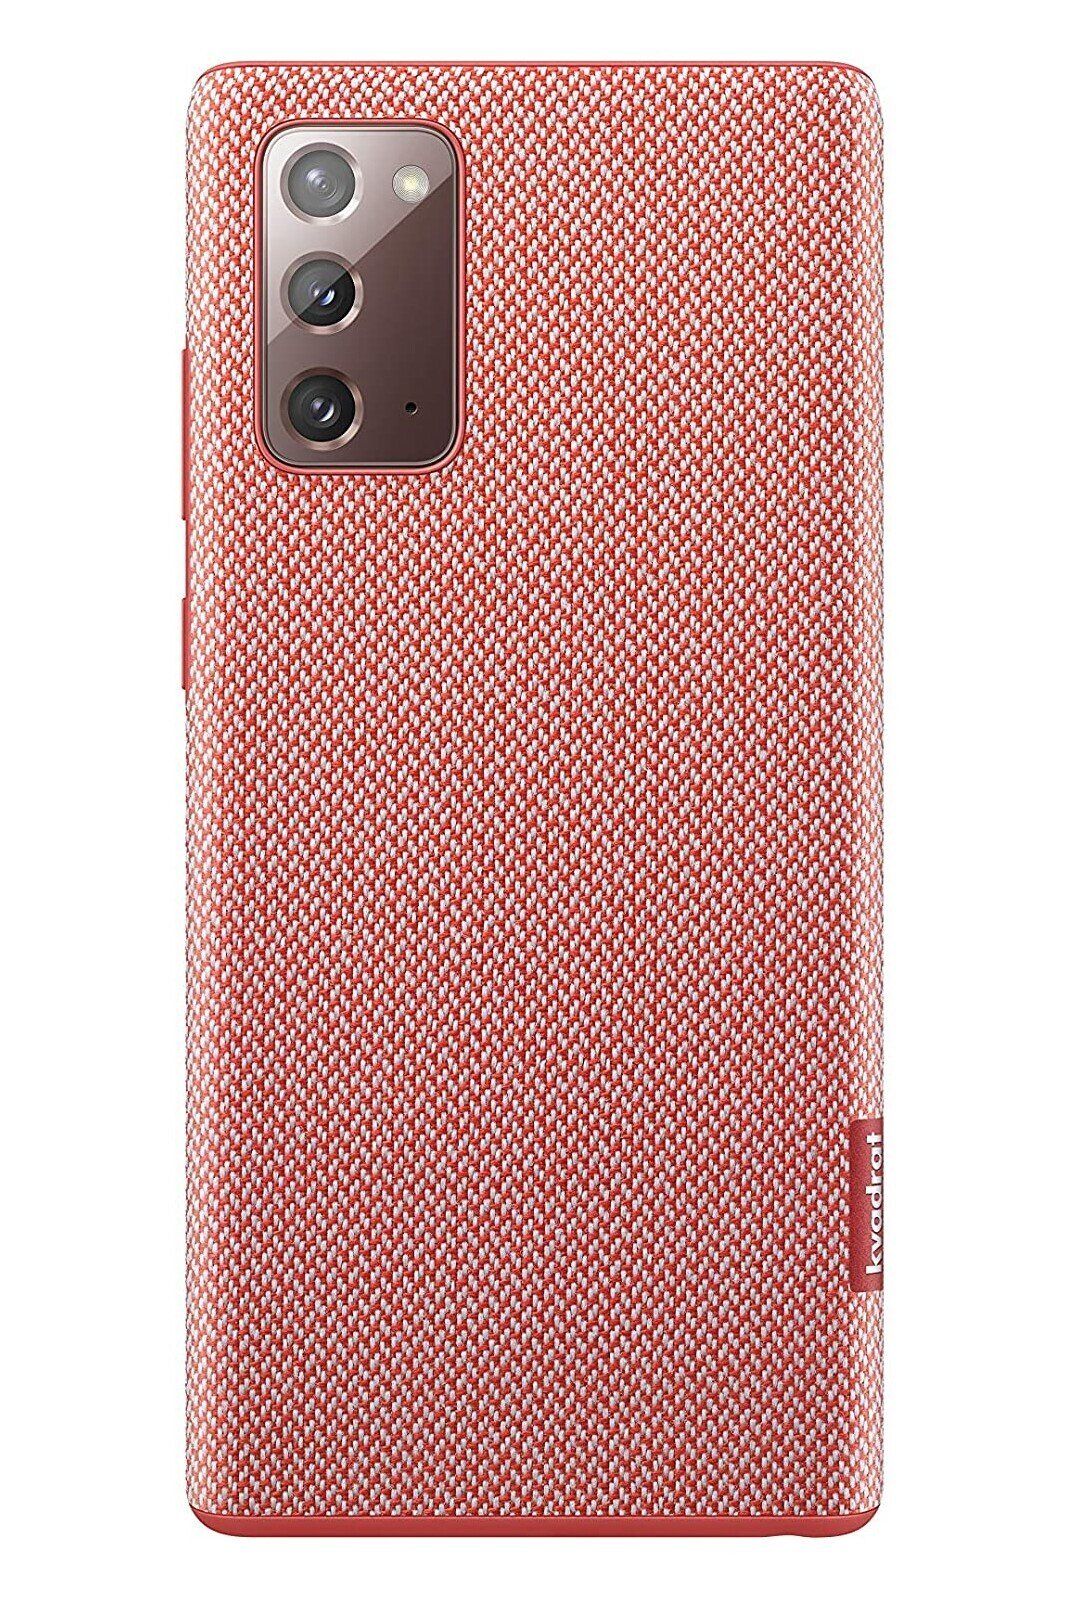 Husa Cover Hard Samsung Kvadrat pentru Samsung Galaxy Note 20 Red thumb